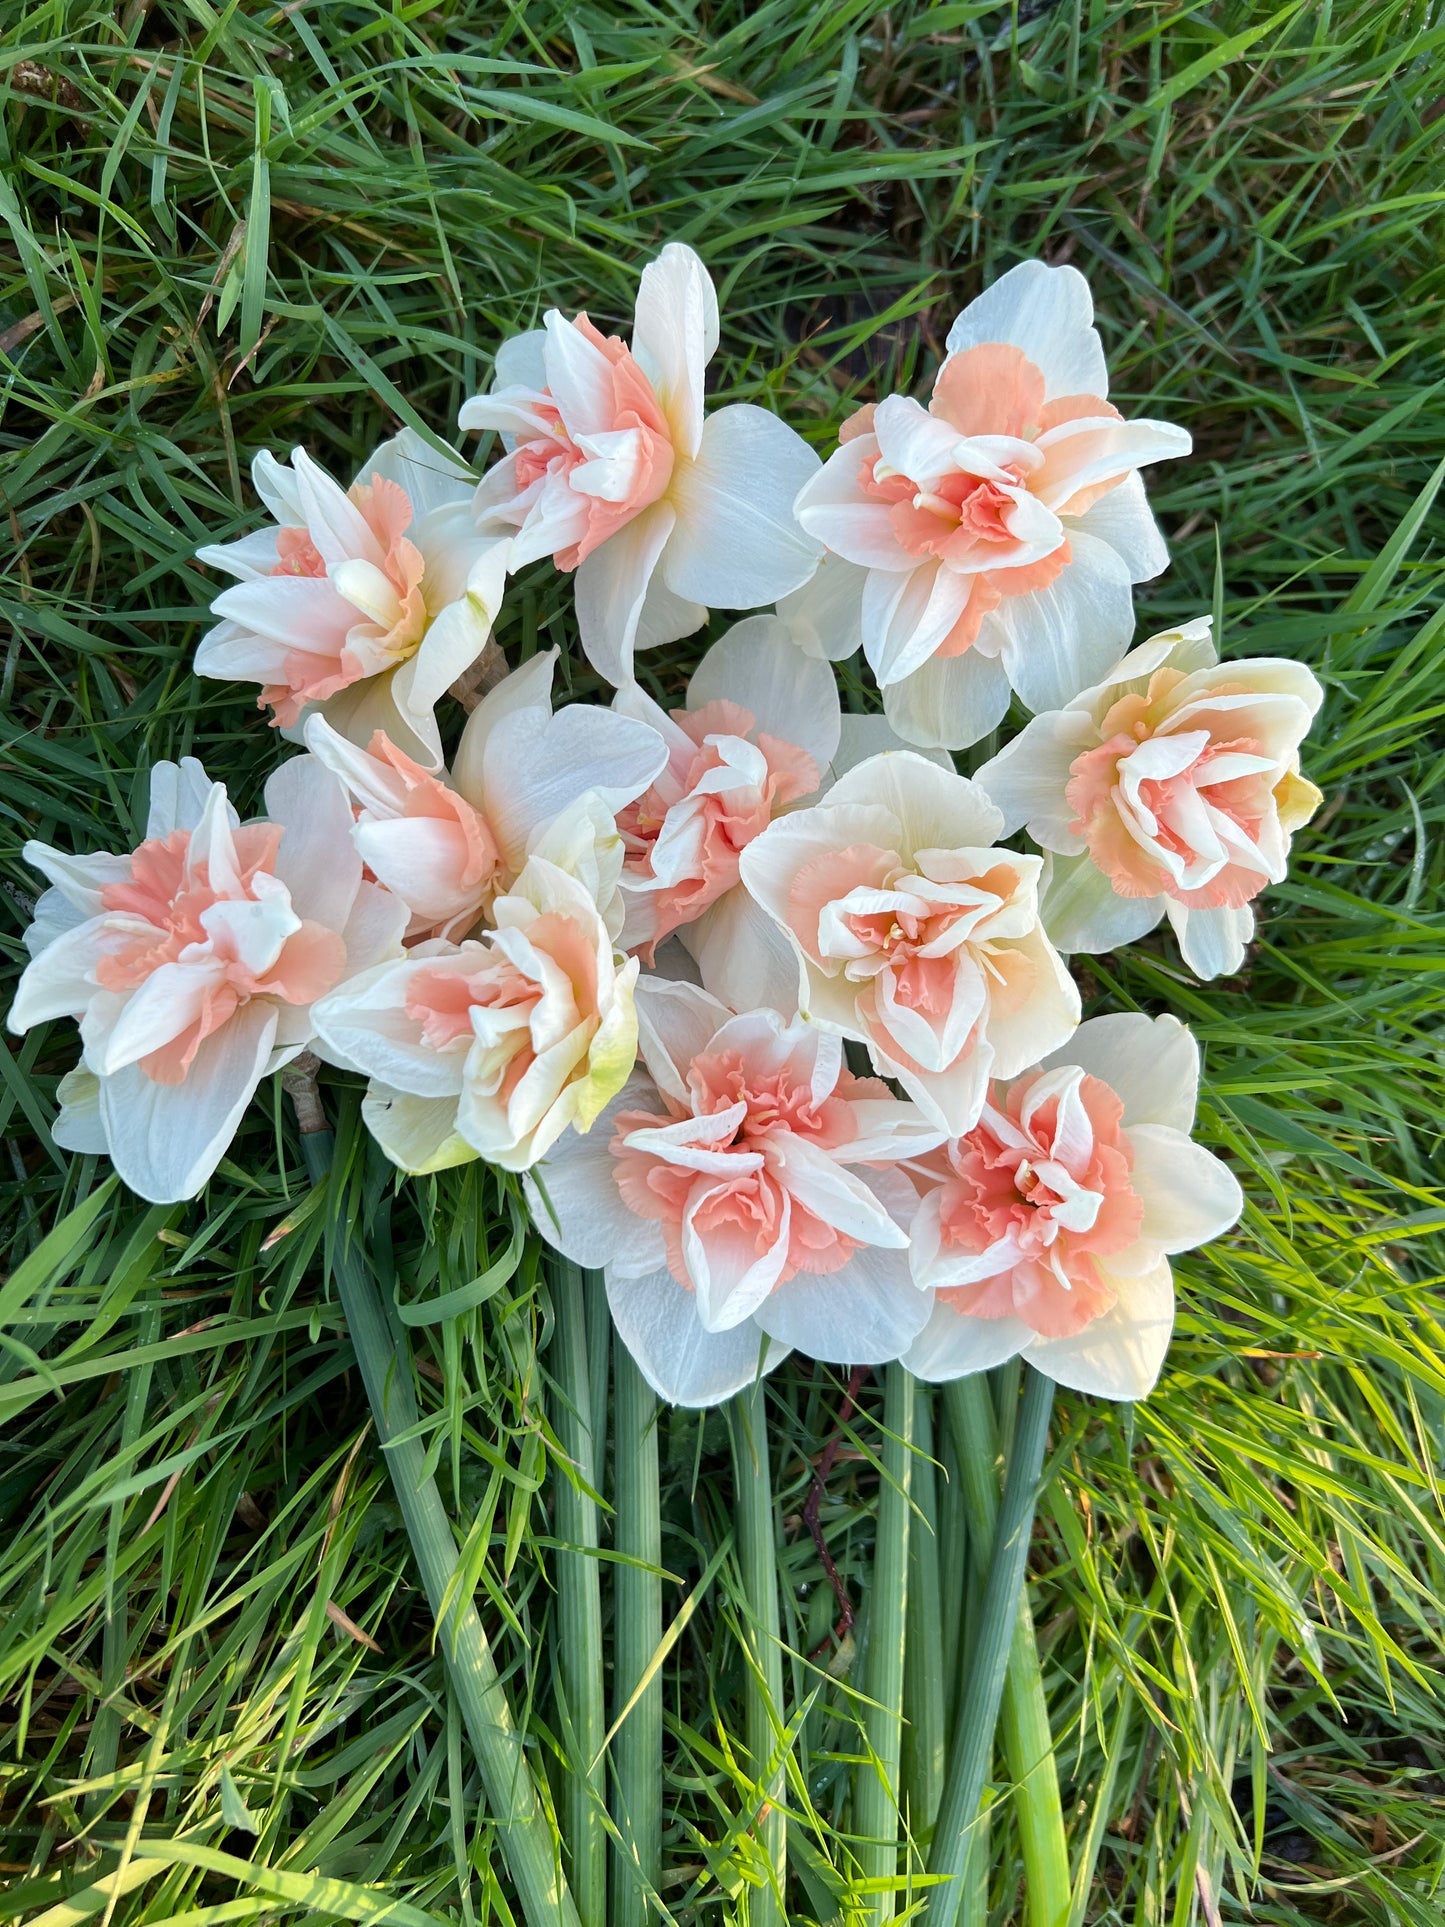 Delnashaugh Narcissus/ Daffodils - 10 Bulbs